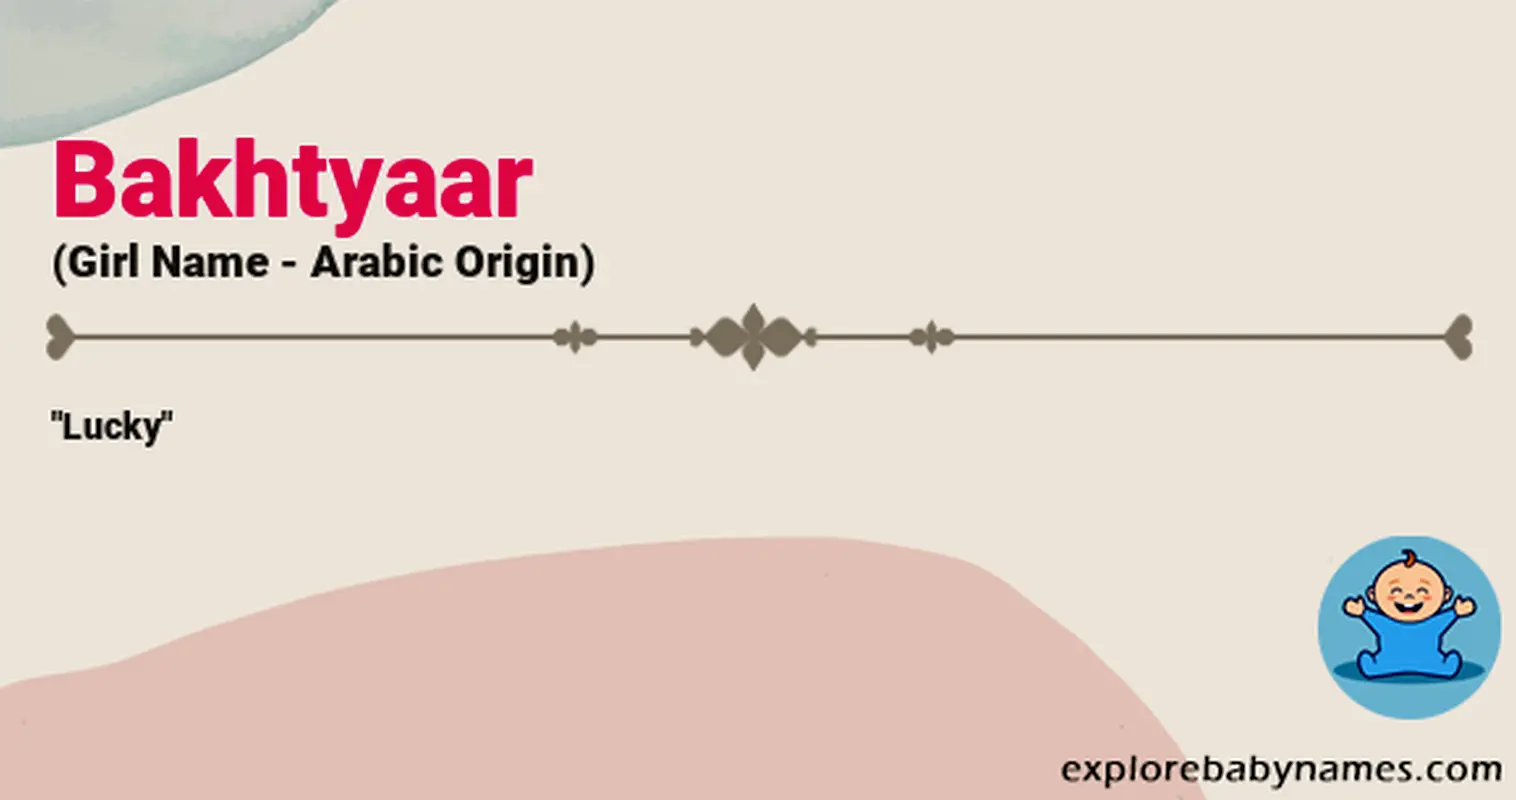 Meaning of Bakhtyaar